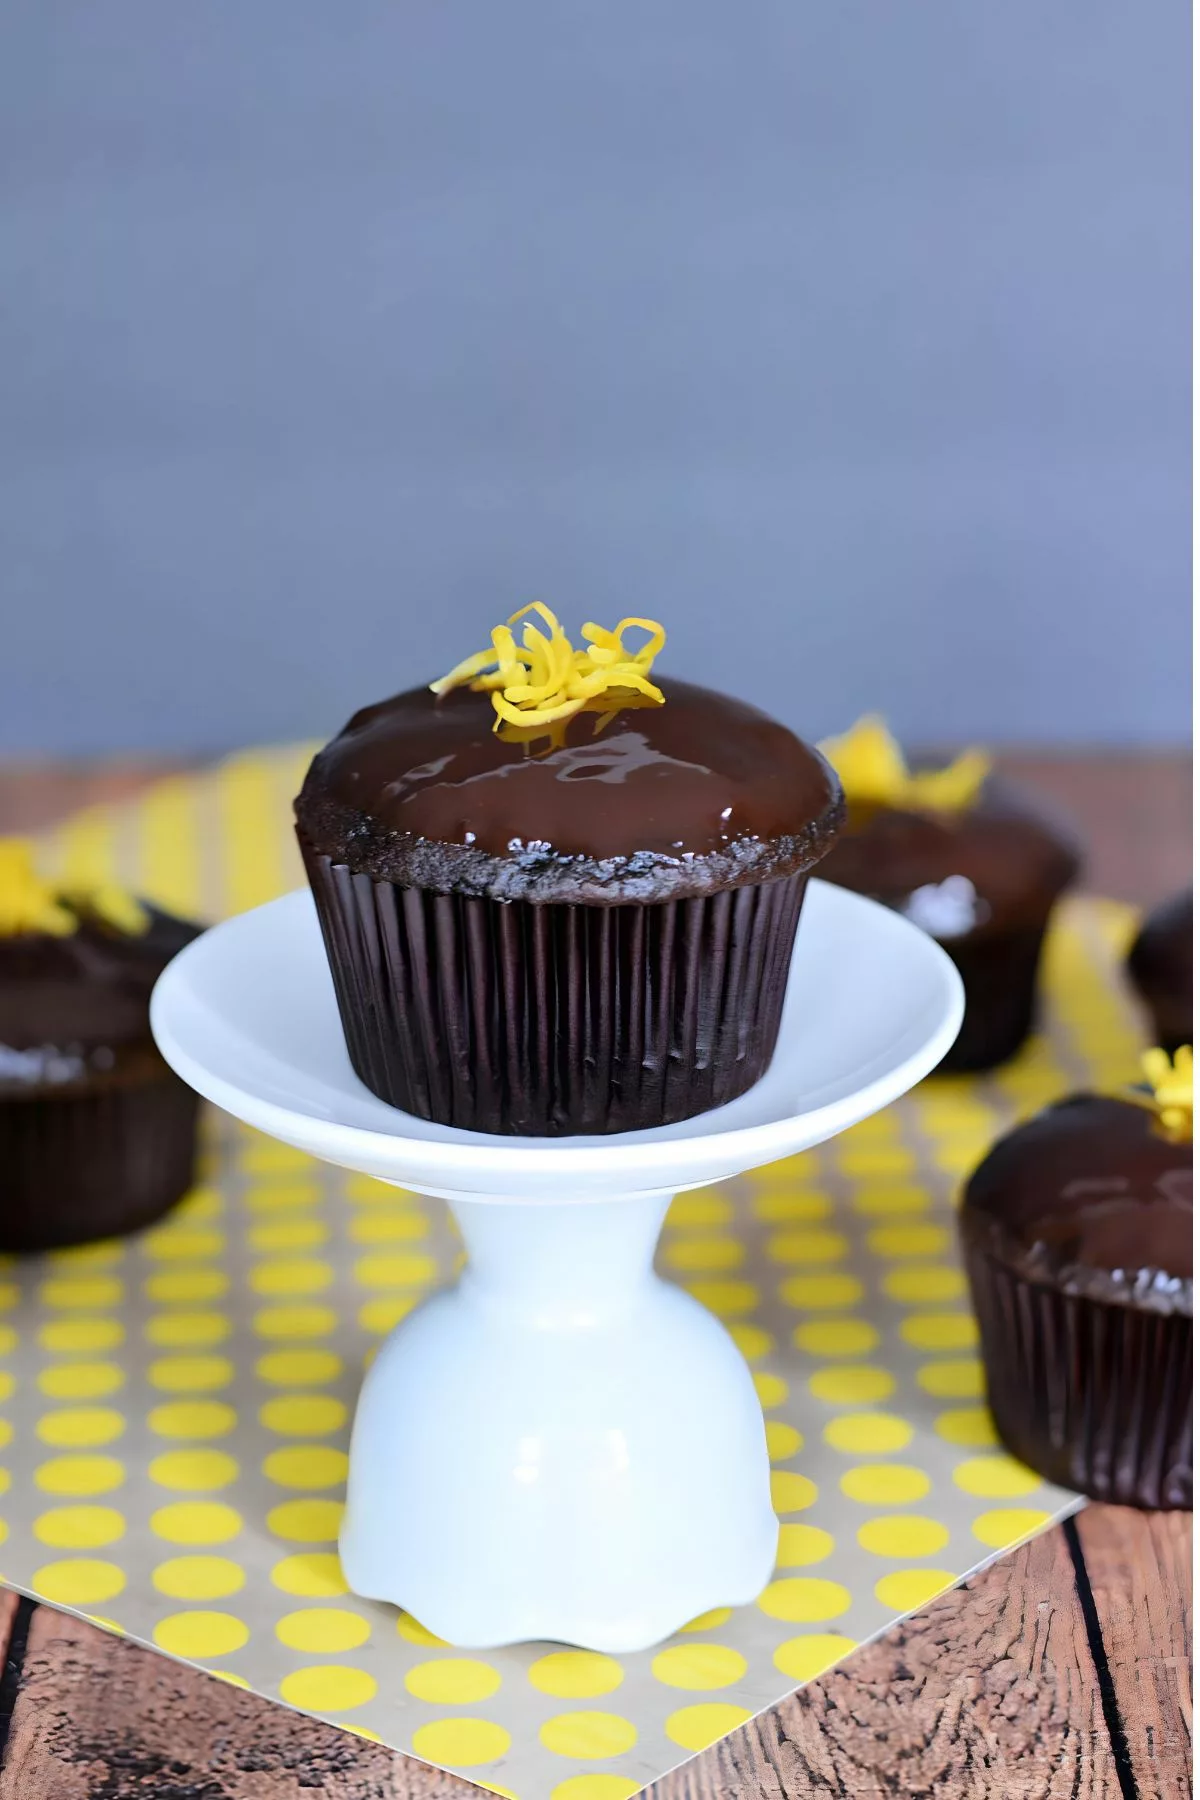 Lemon Filled Chocolate Cupcakes